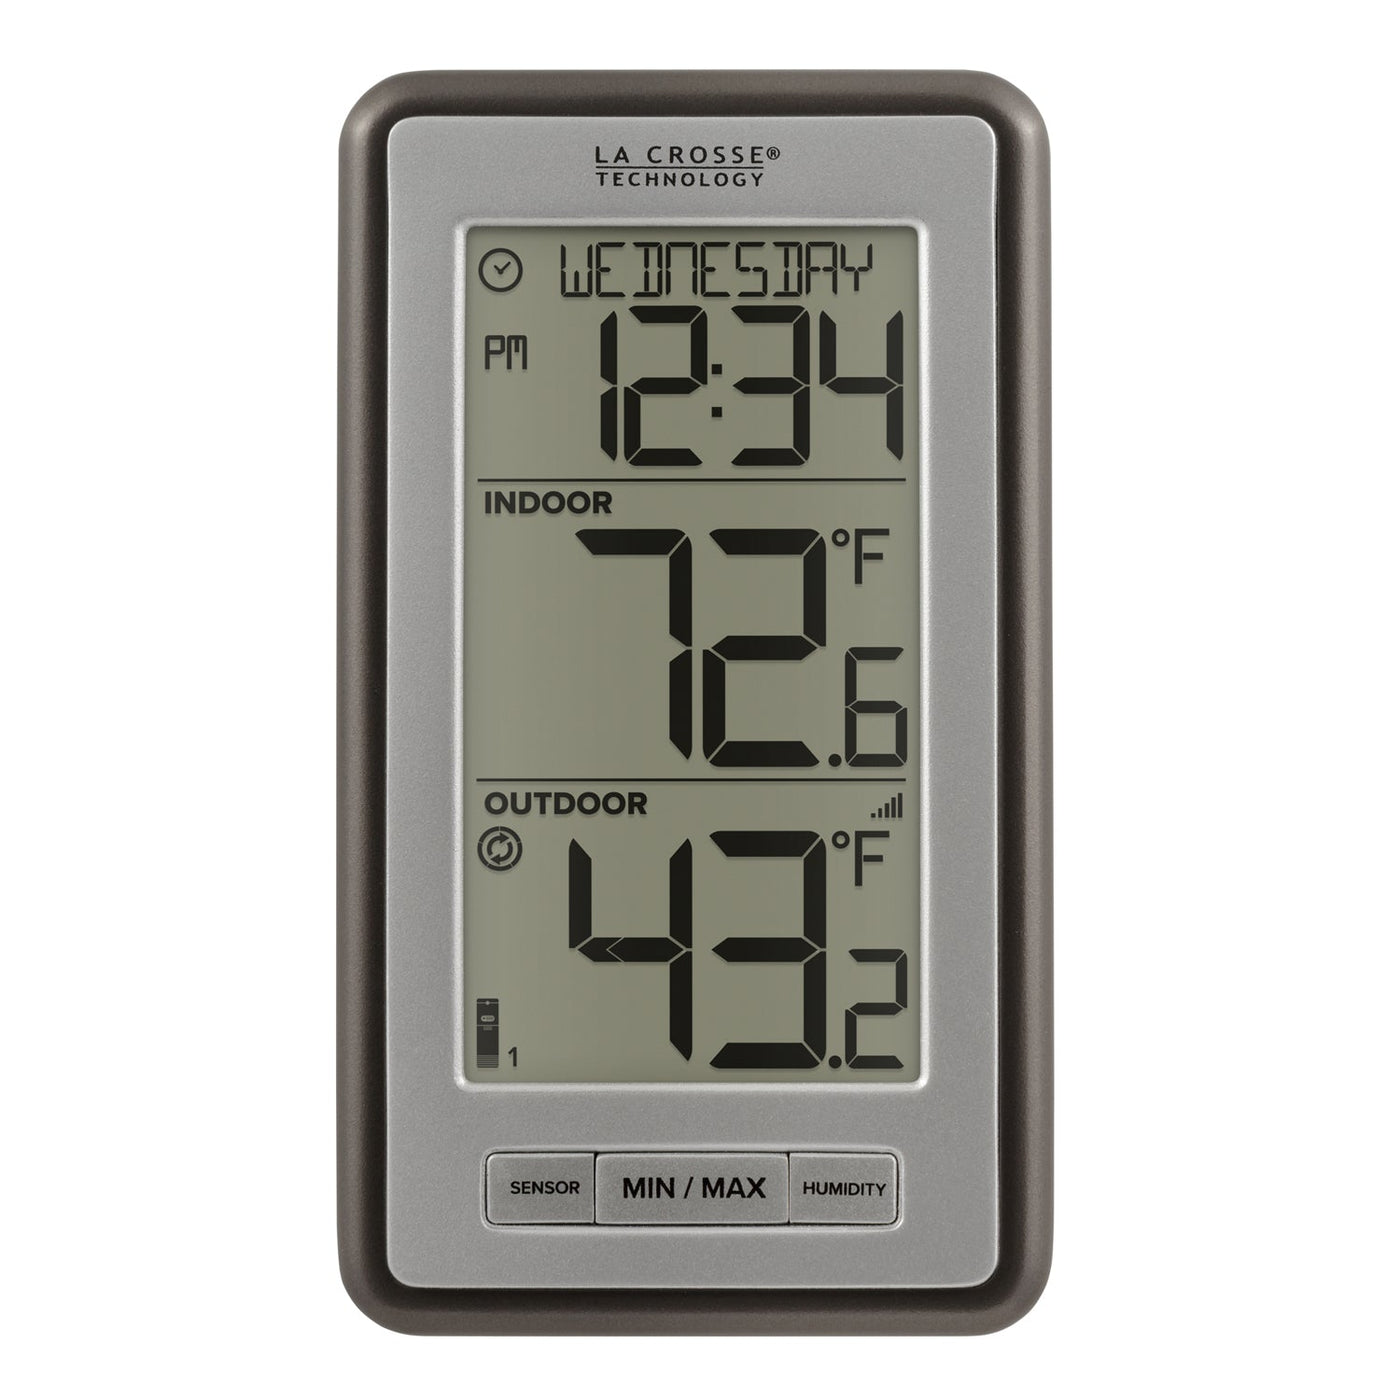 La Crosse Technology - Wireless Indoor/Outdoor Thermometer